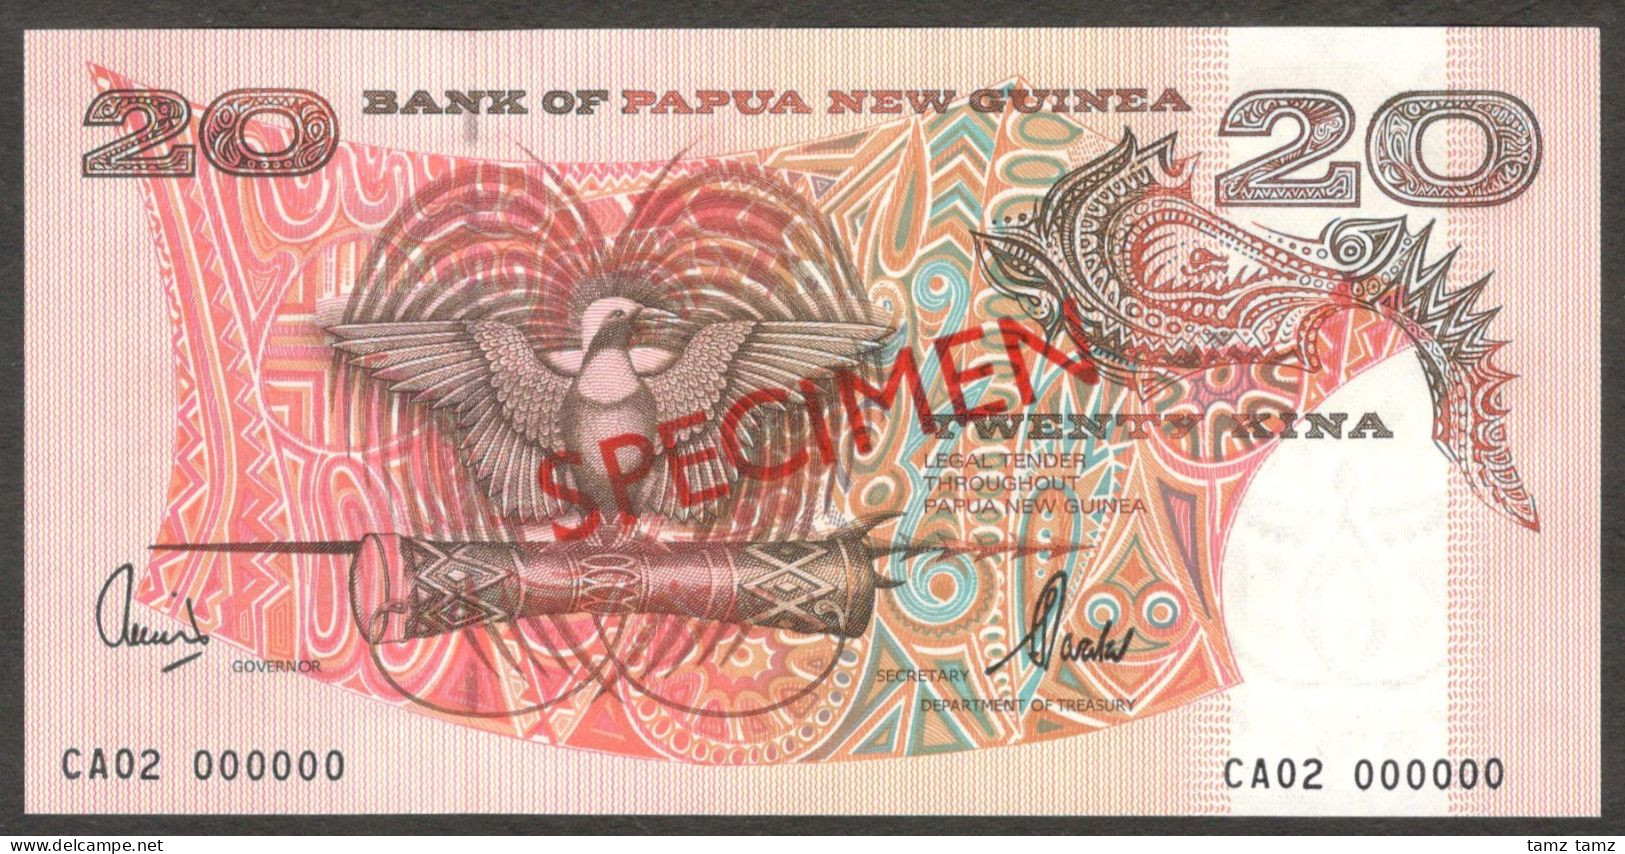 Papua New Guinea 20 Kina P-10es 2002 Specimen CA02 000000 UNC - Papua Nuova Guinea